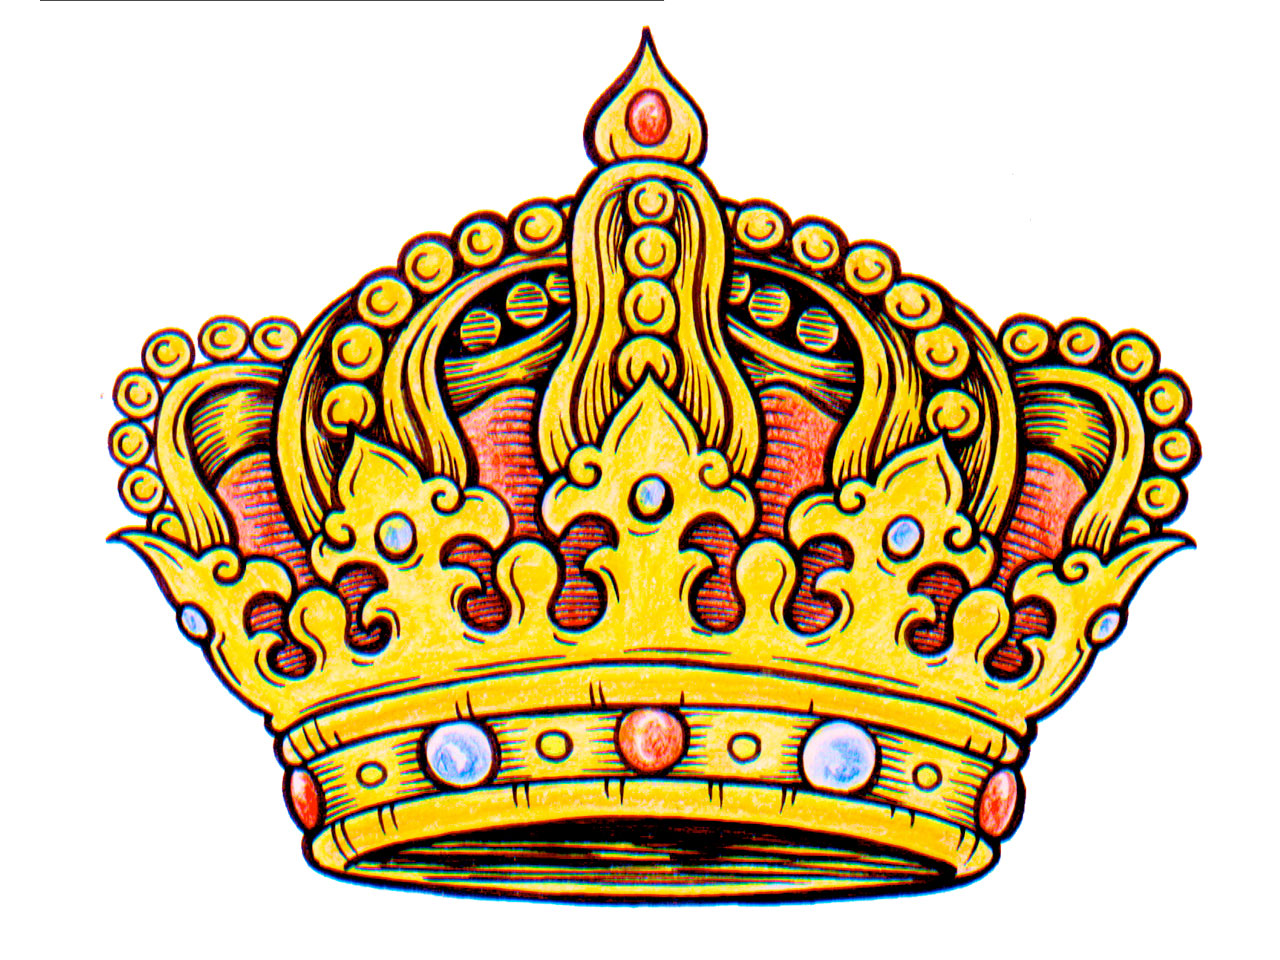 Kings Crown Clipart - Tumundografico